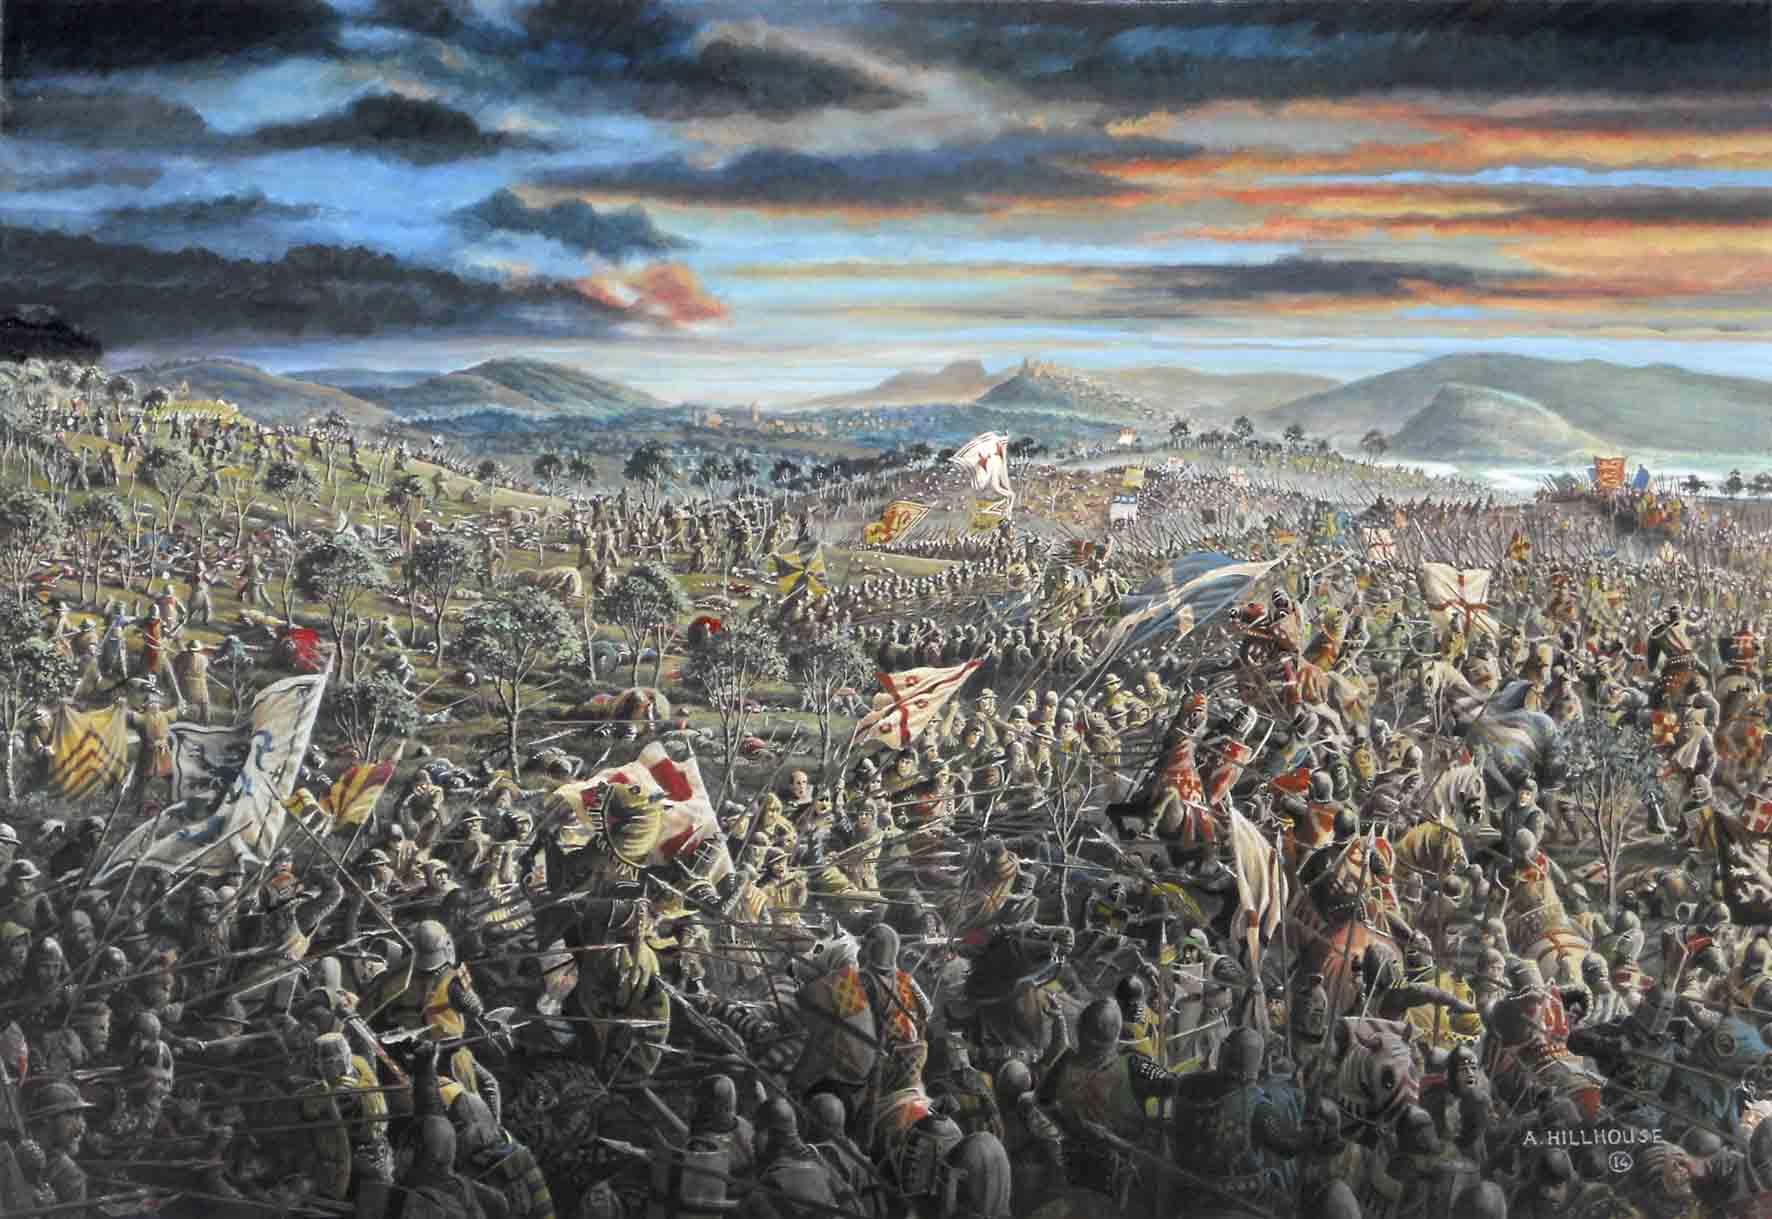 The Battle of Bannockburn happened in 1314